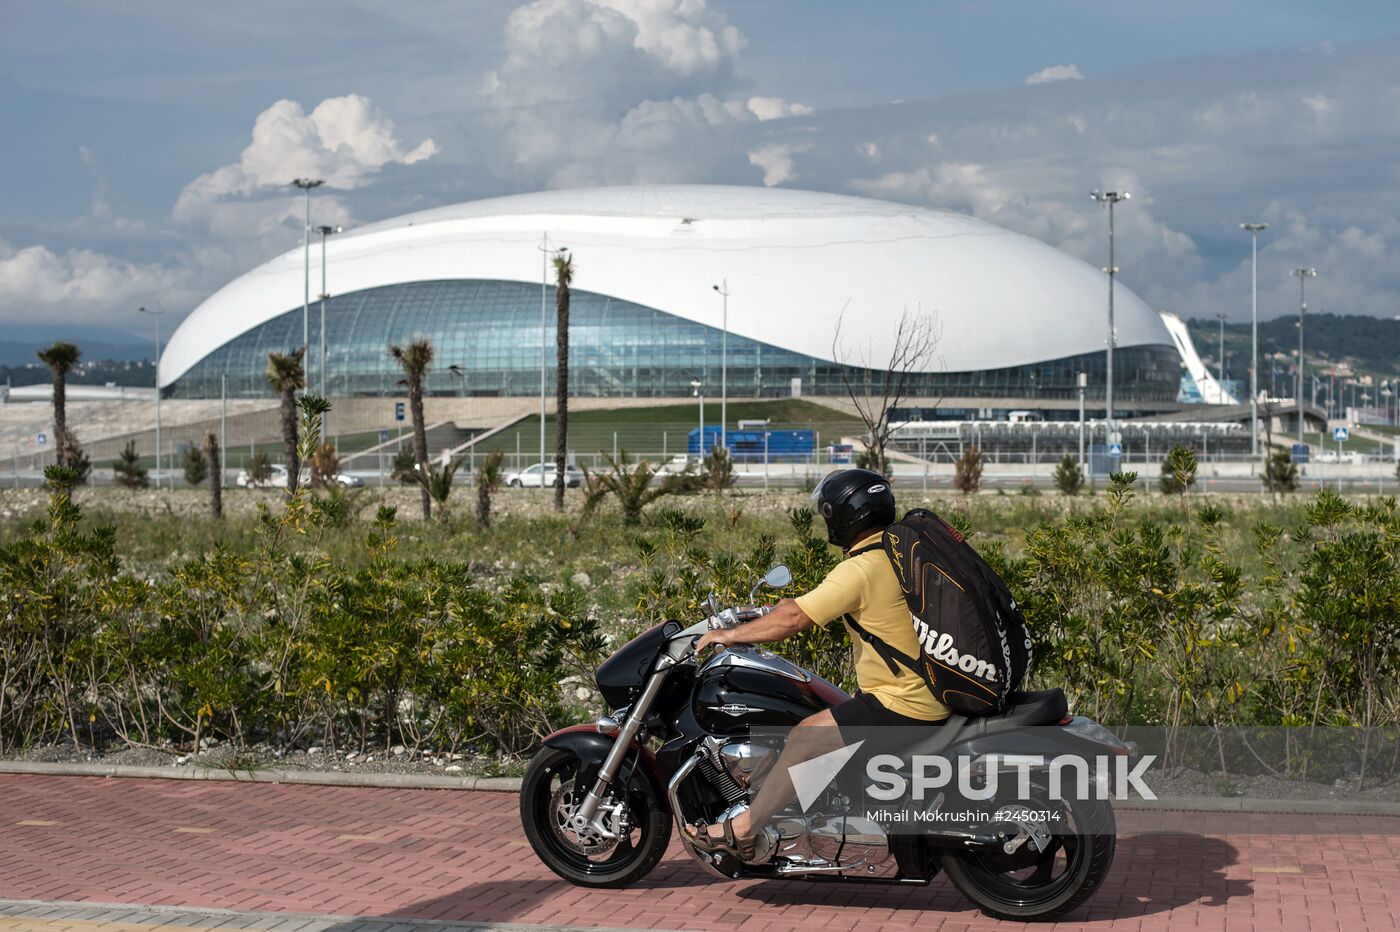 Views of Sochi Olympic Park's venues